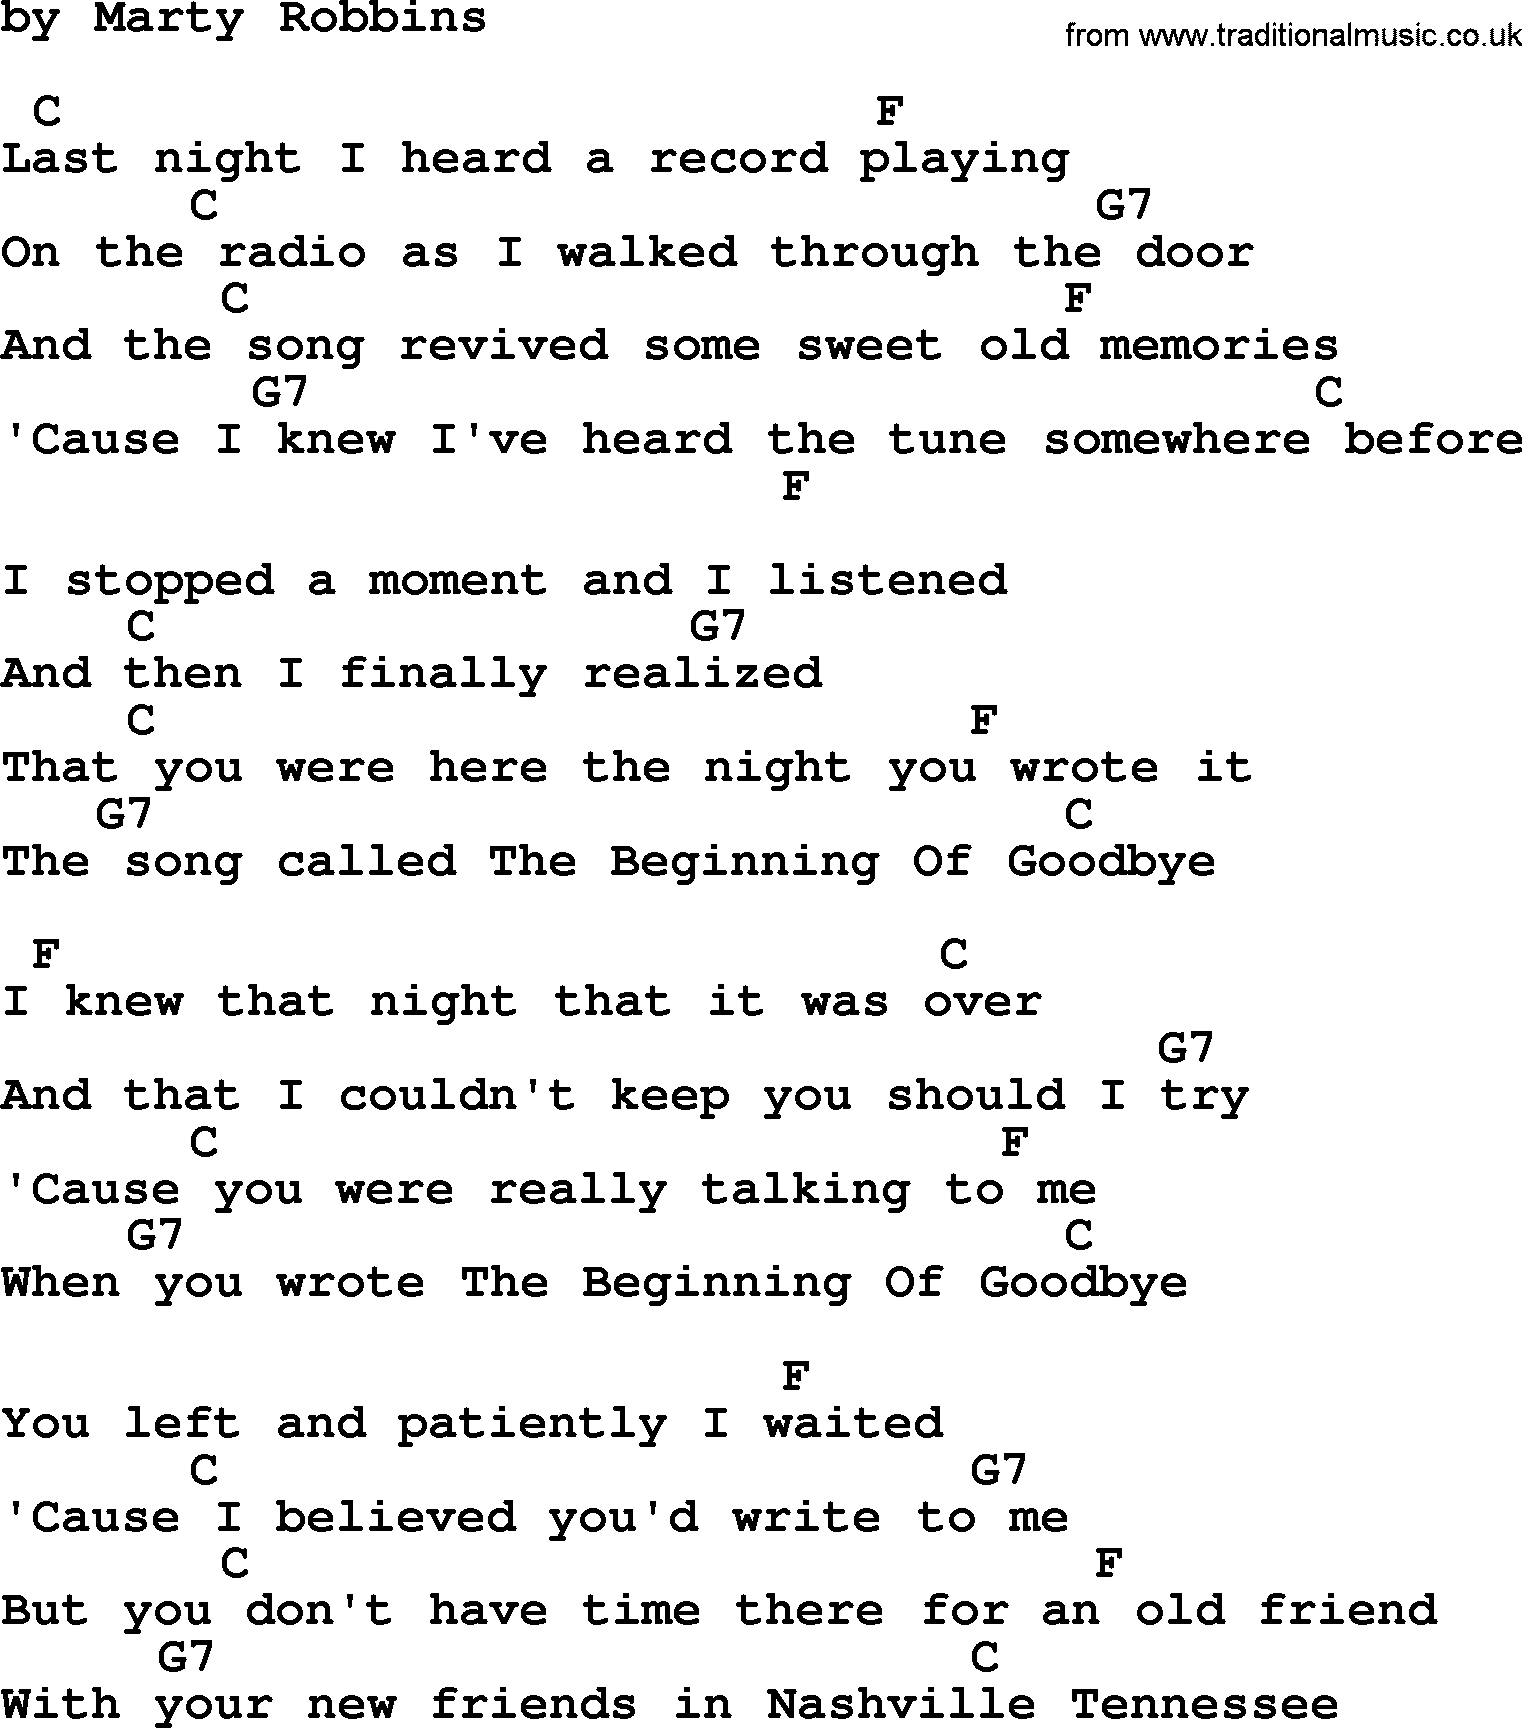 Marty Robbins song: The Beginning Of Goodbye, lyrics and chords